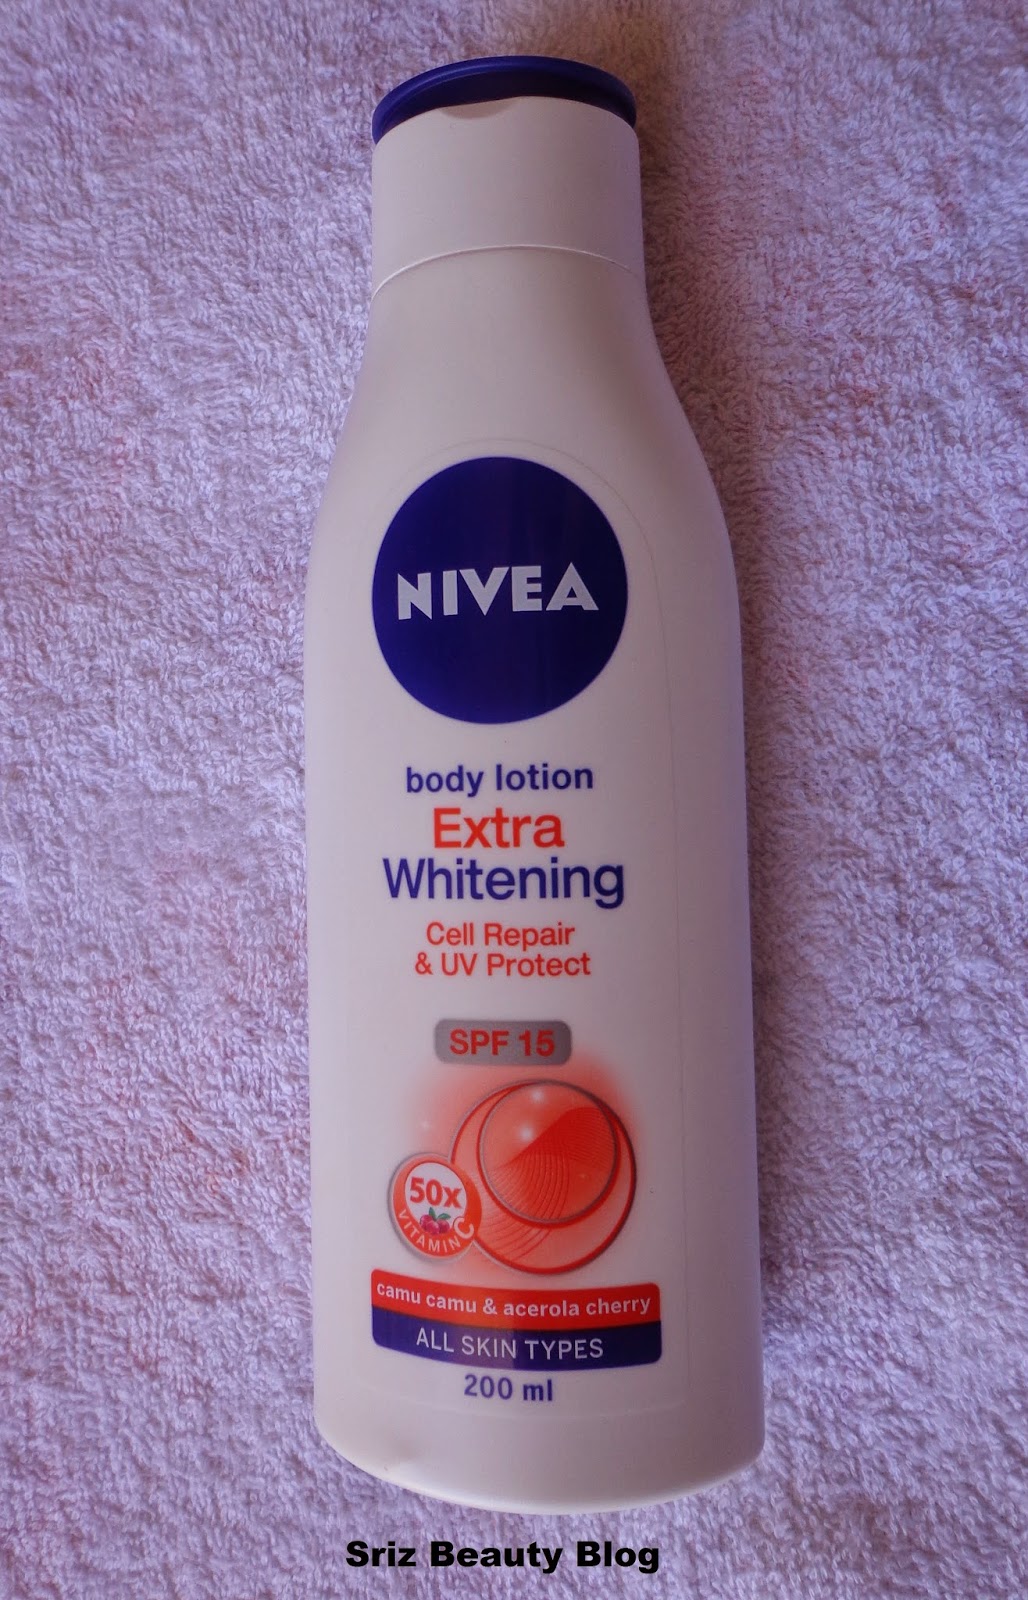 Sriz Beauty Blog: Nivea Extra Whitening Cell Repair And UV Body SPF15